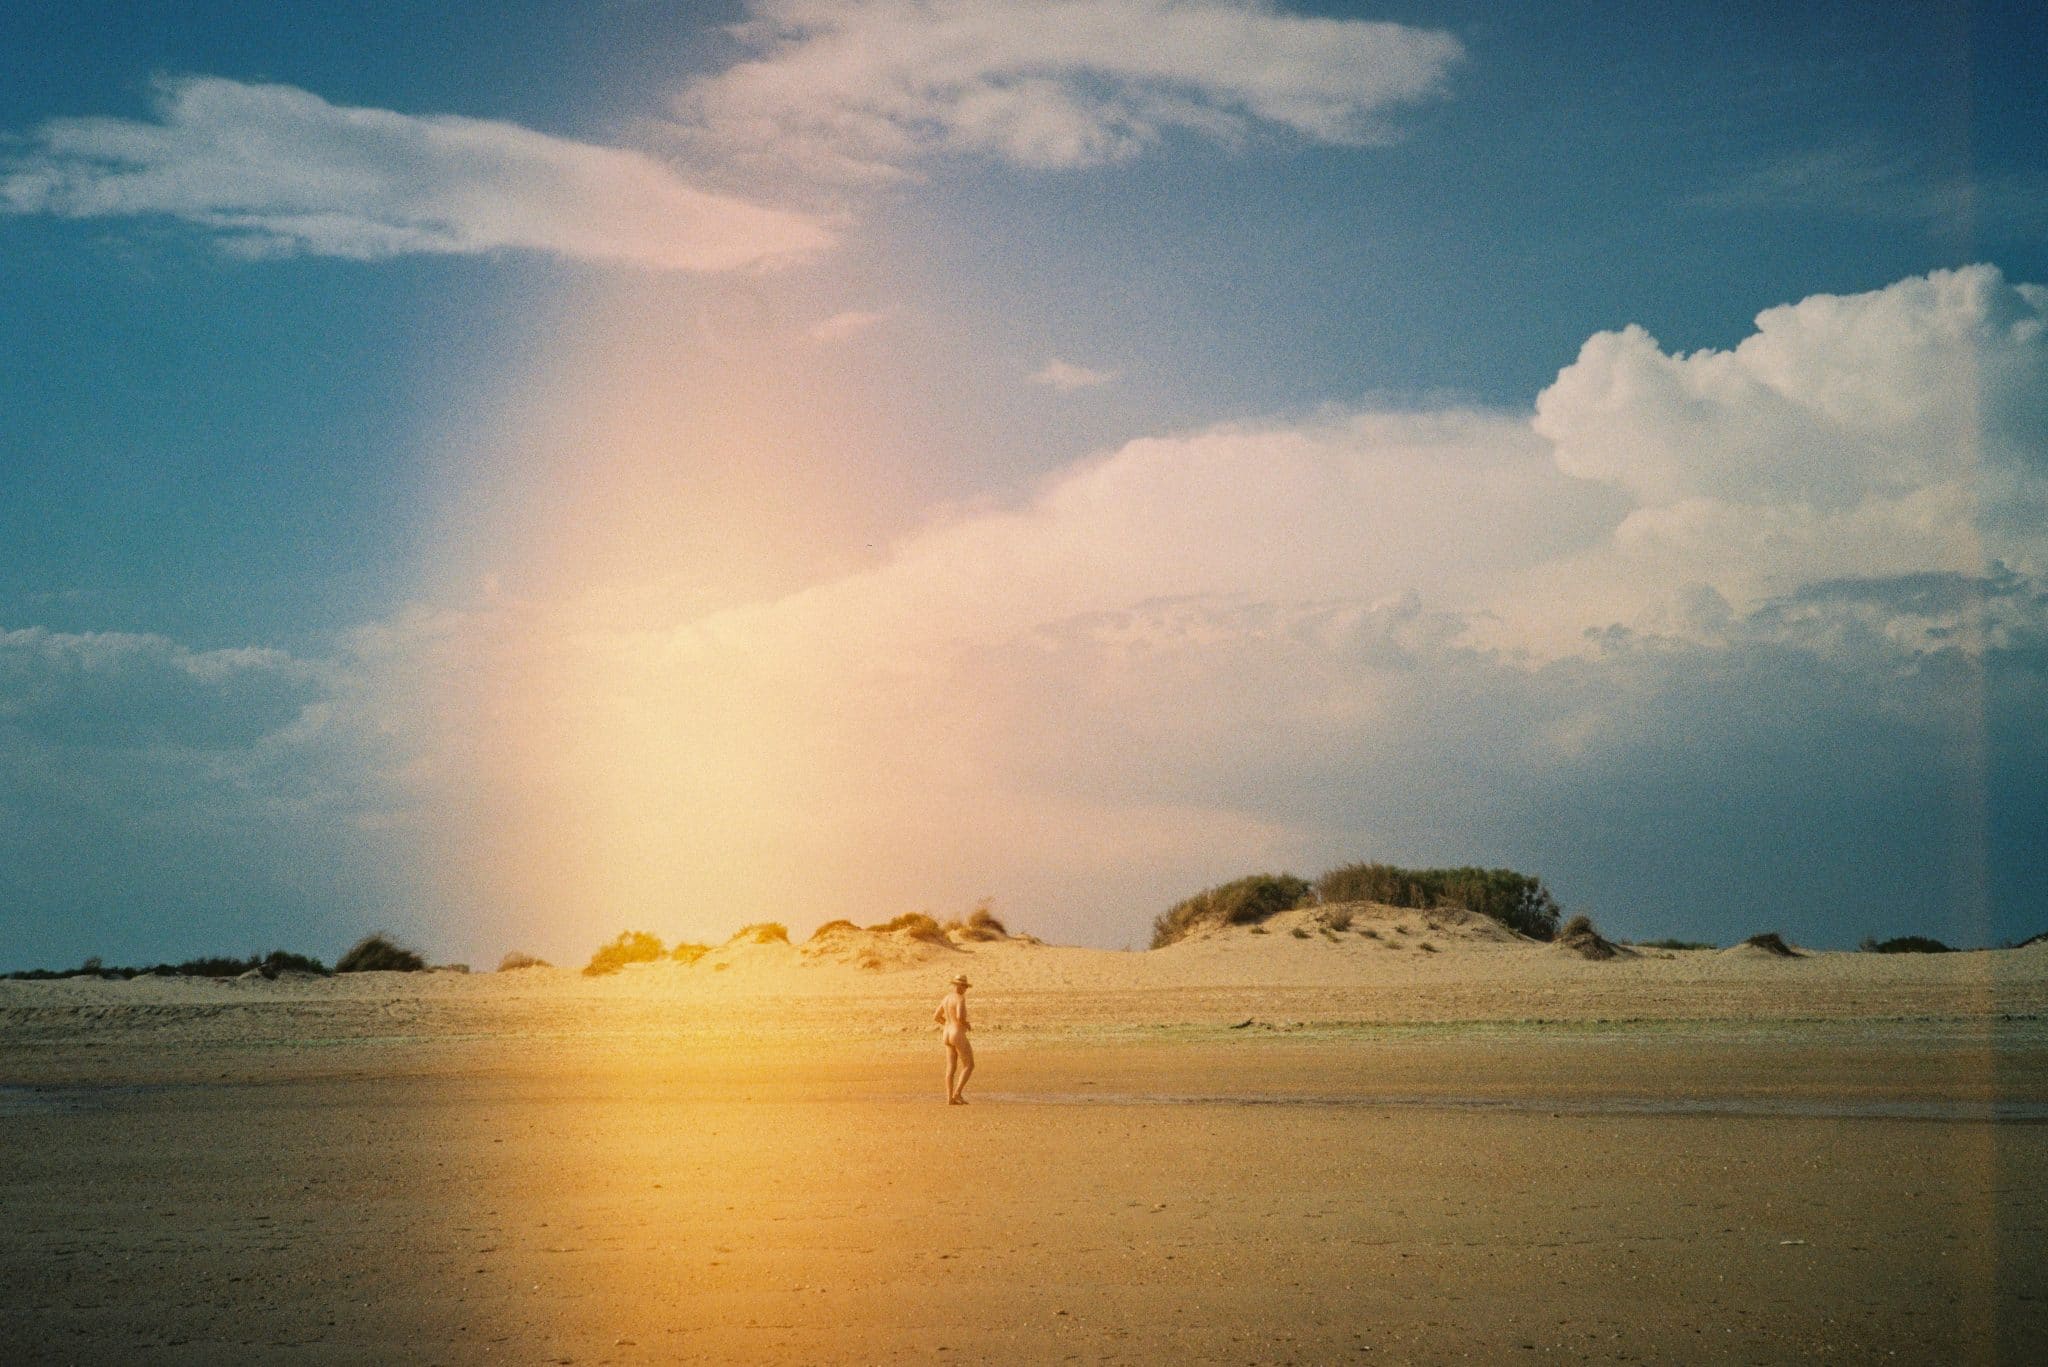 a person walking on a sandy beach